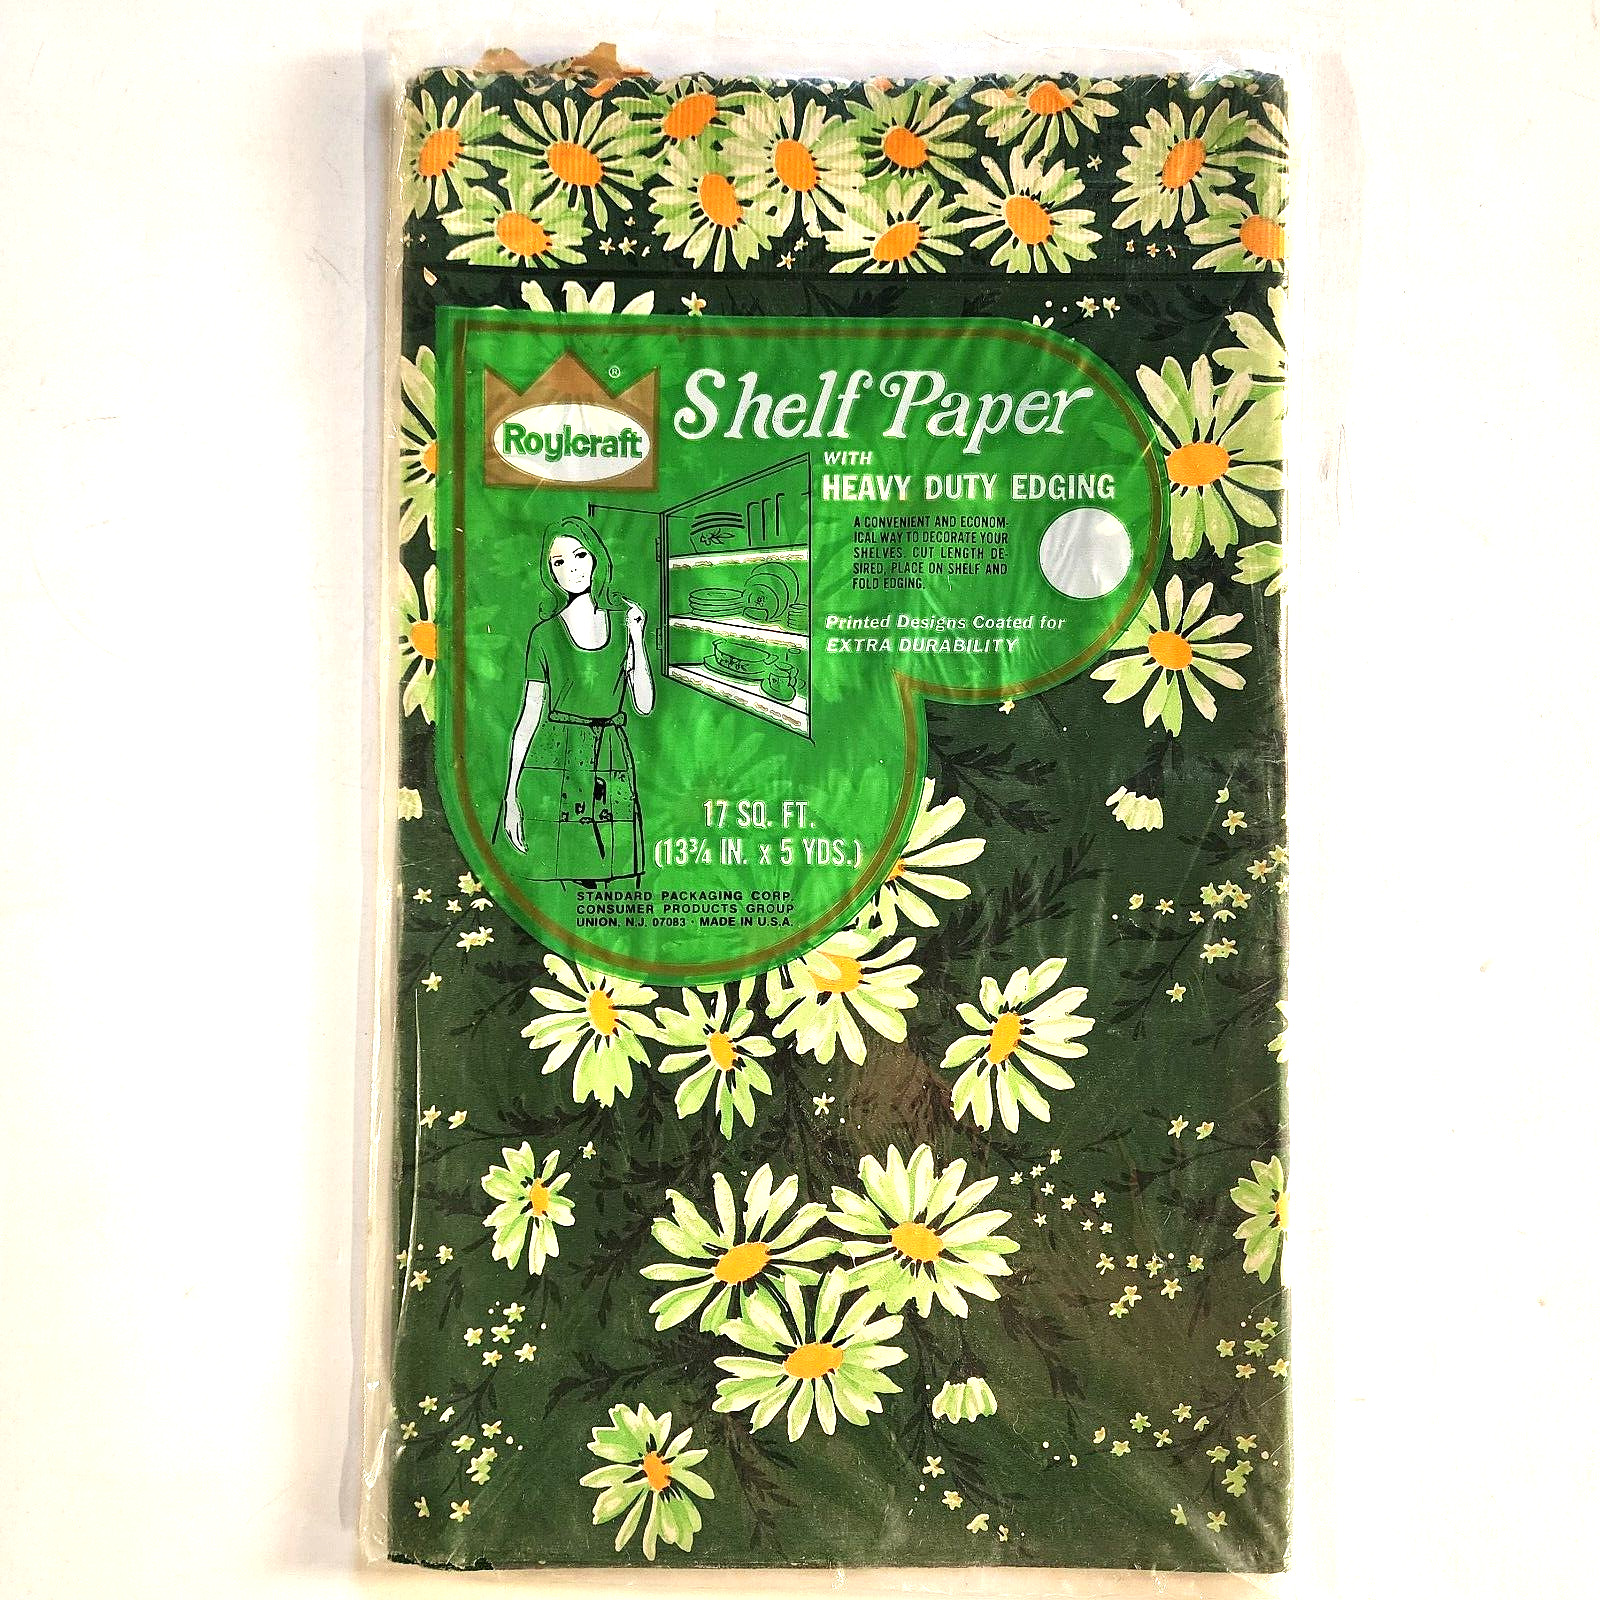 Vintage Roylcraft Shelf Paper Green w/Flowers Heavy Duty Edge Unopened 17 sq ft